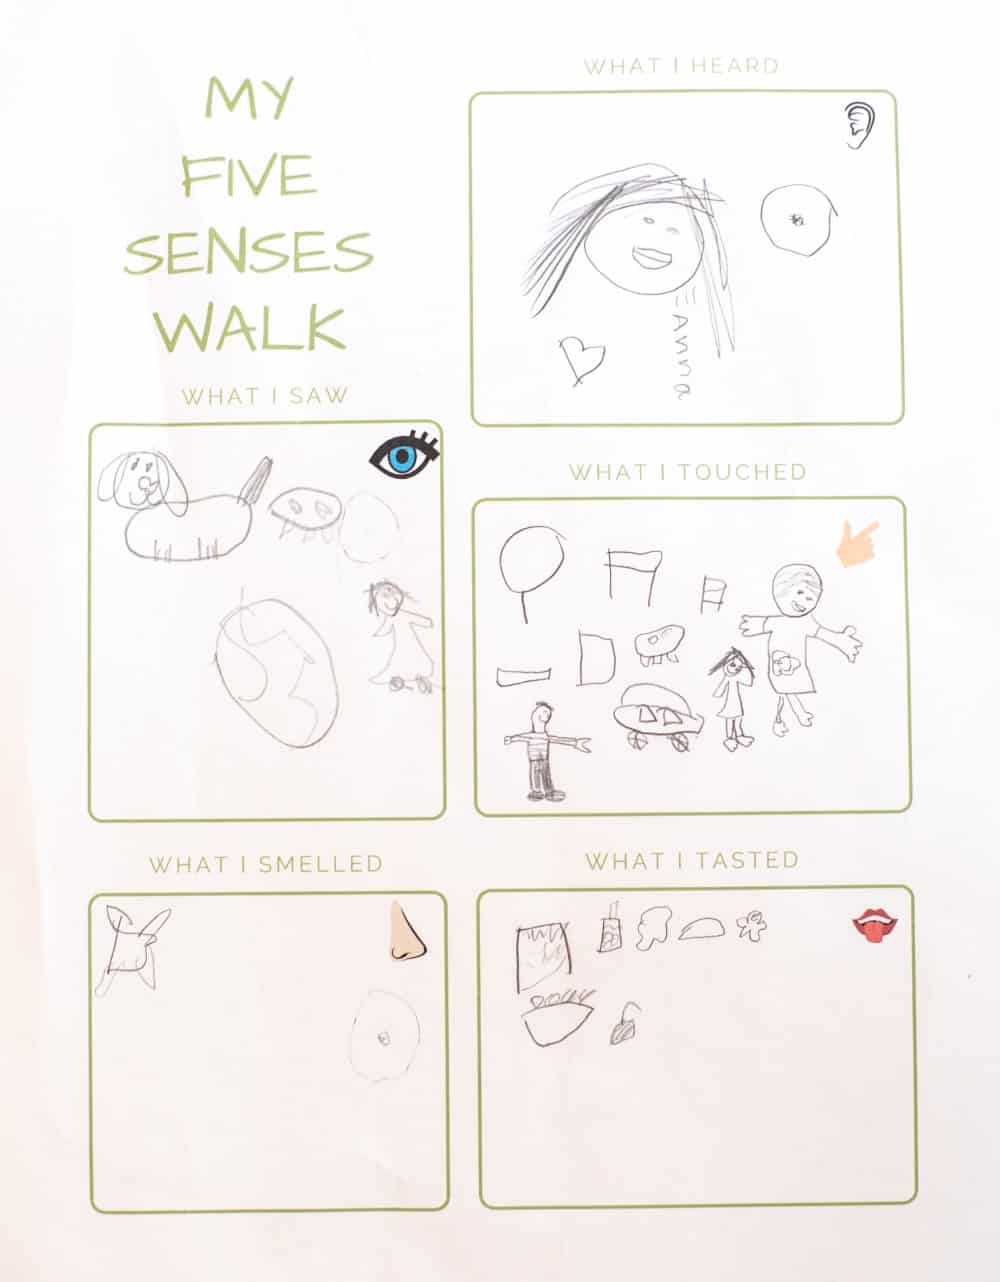 A five senses walk learning activity for kindergarten.